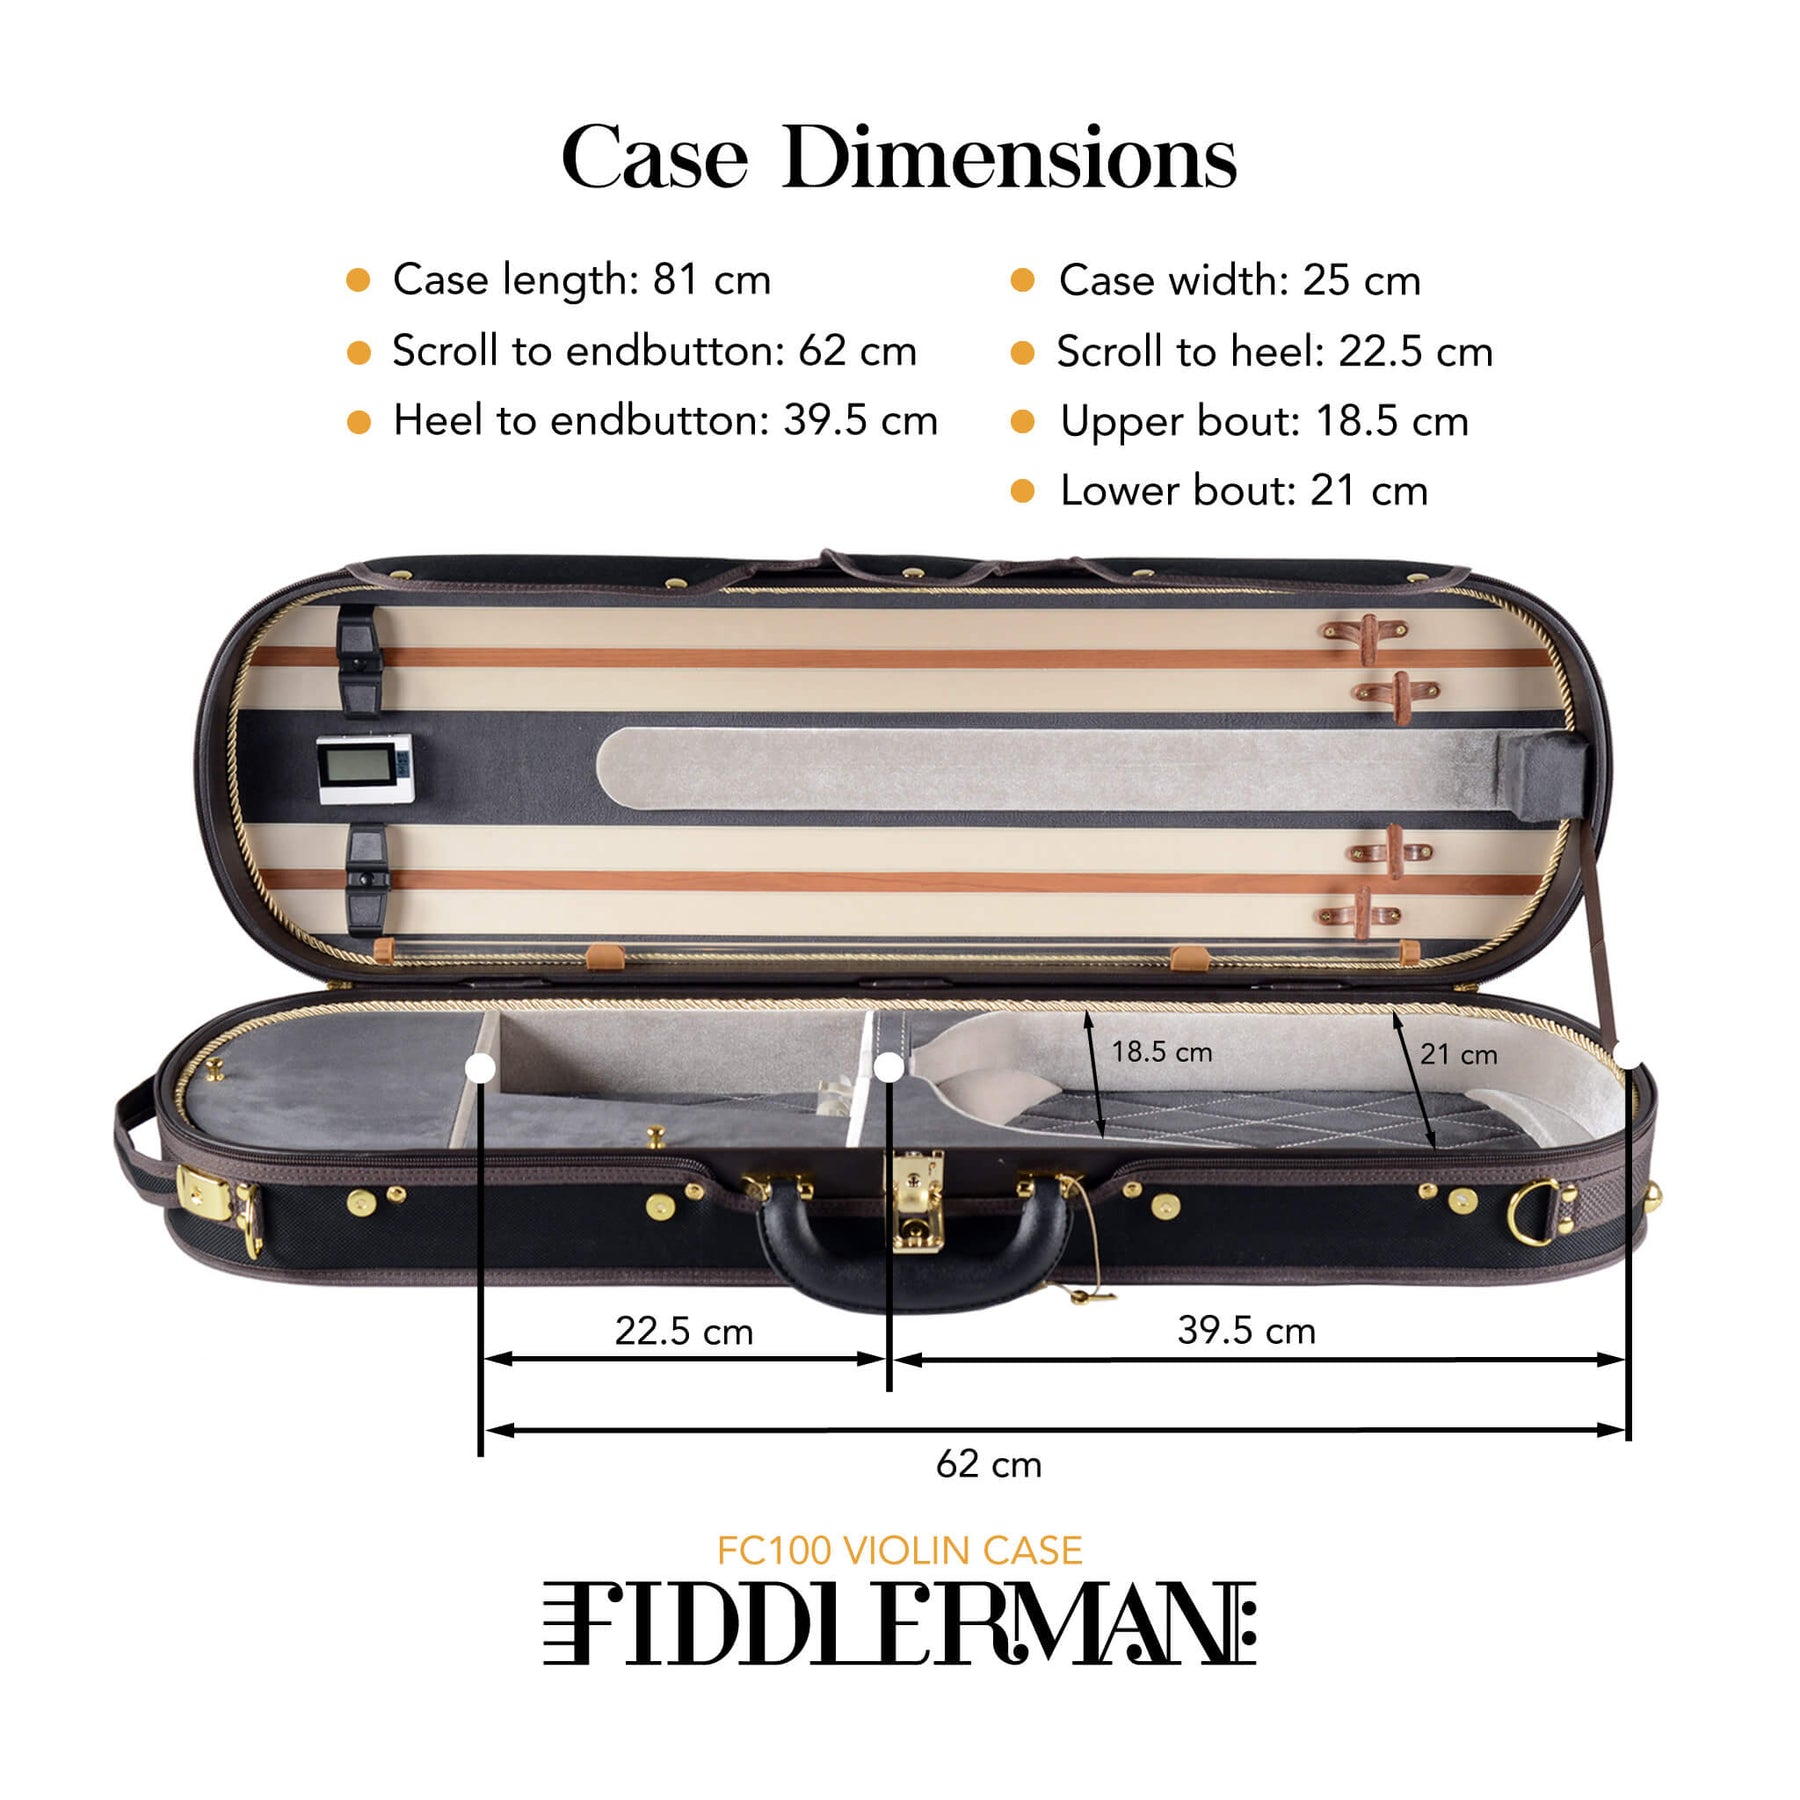 Fiddlerman Oblong Violin FC100